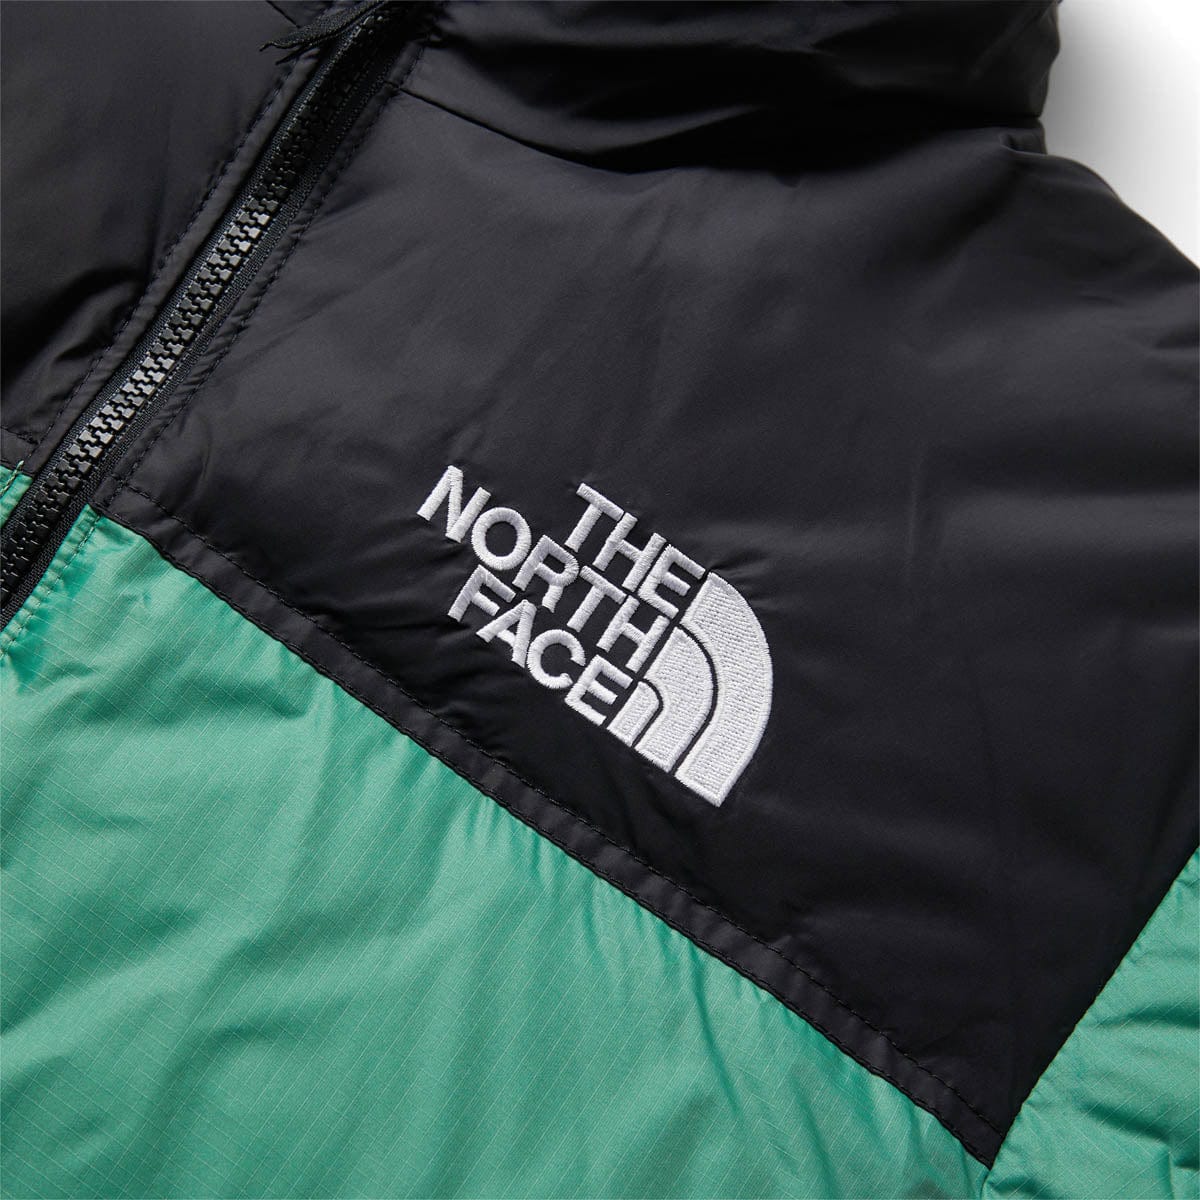 The North Face Outerwear 1996 RETRO NUPTSE JACKET